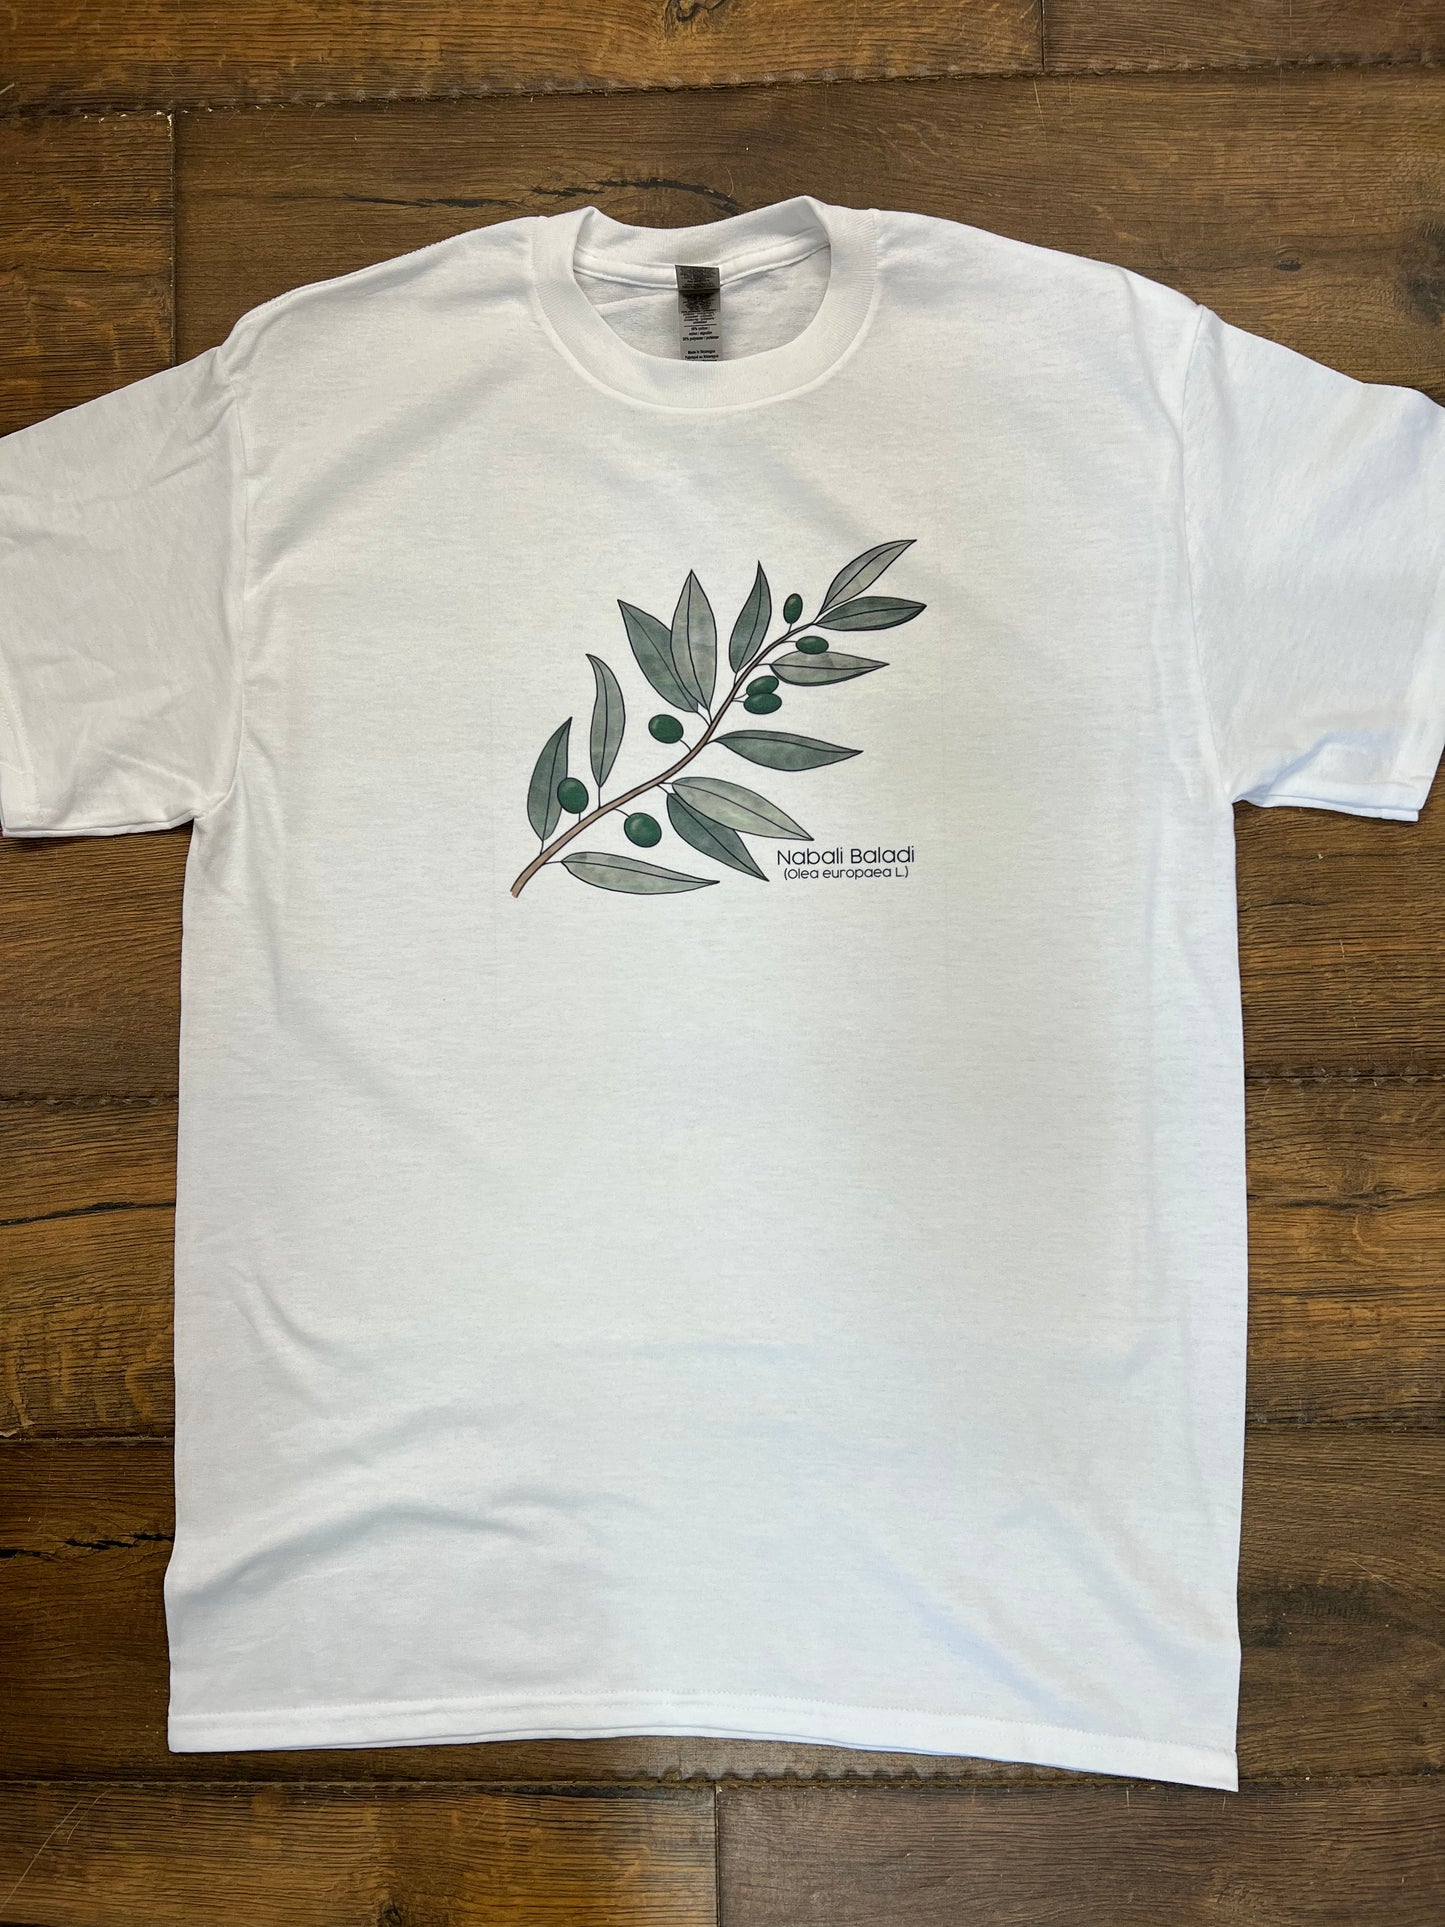 Palestine Olive Branch Shirt - Funding PCRF